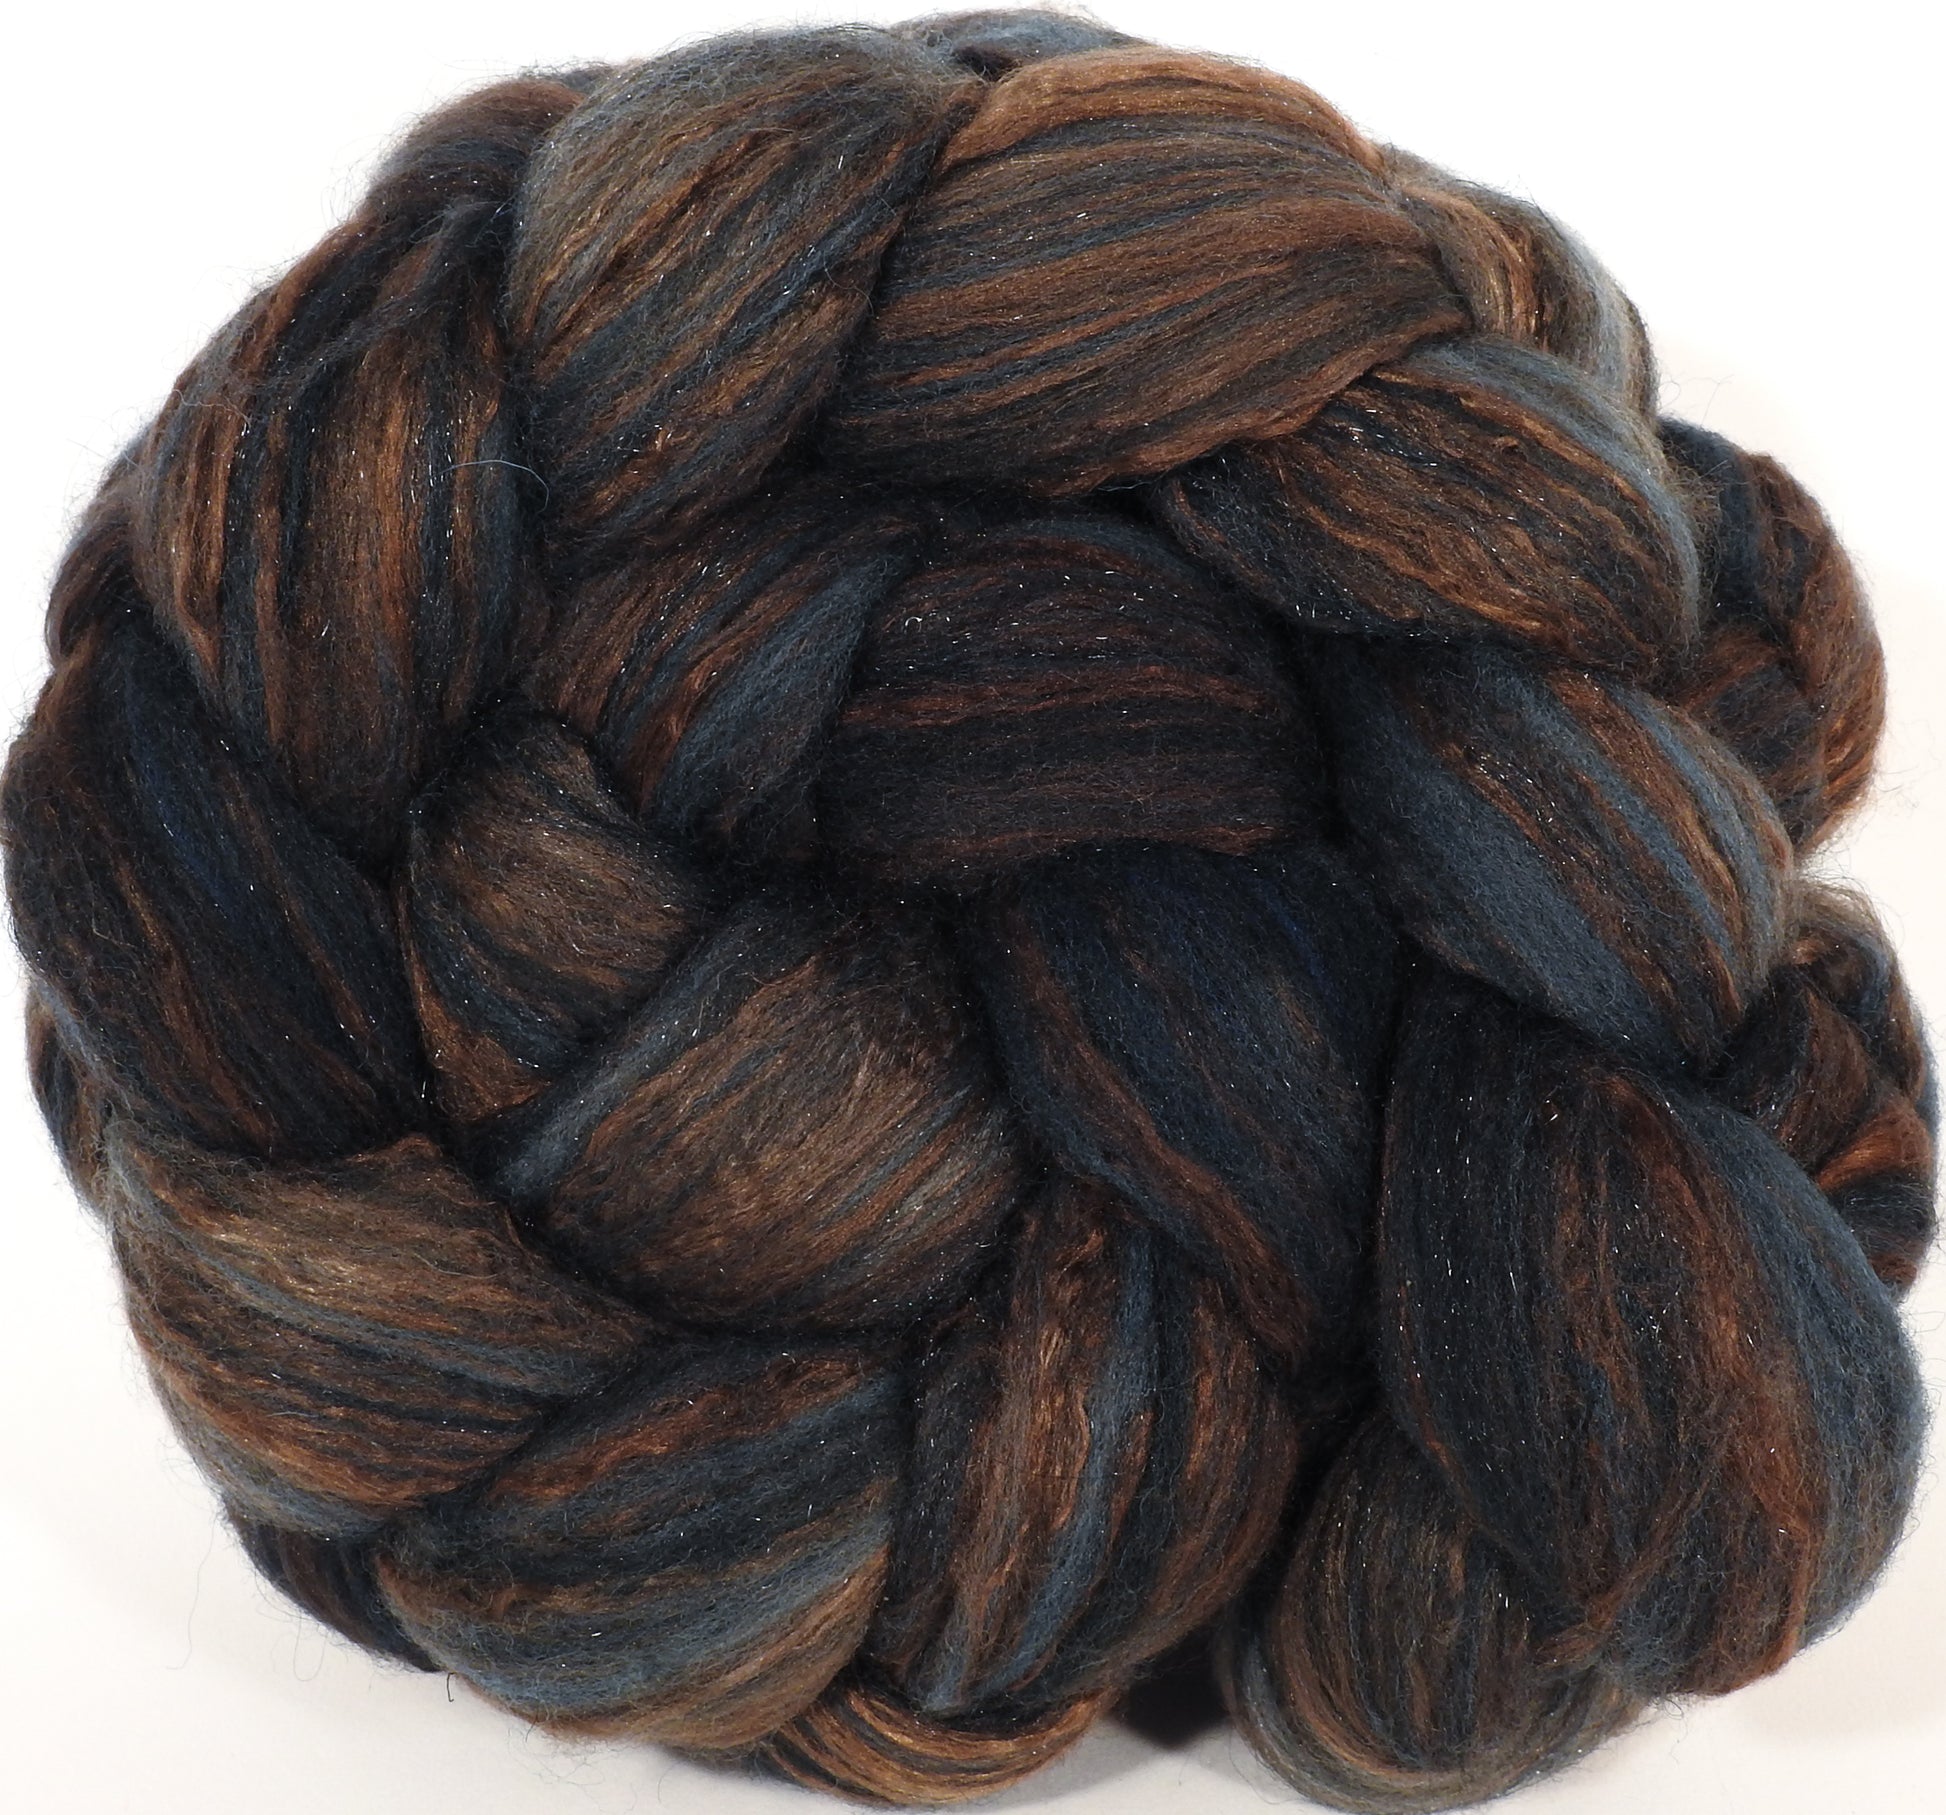 Batt in a Braid #7- Soot -(5.8 oz.) Polwarth/ Manx / Mulberry silk/ Firestar (30/30/30/10) - Inglenook Fibers